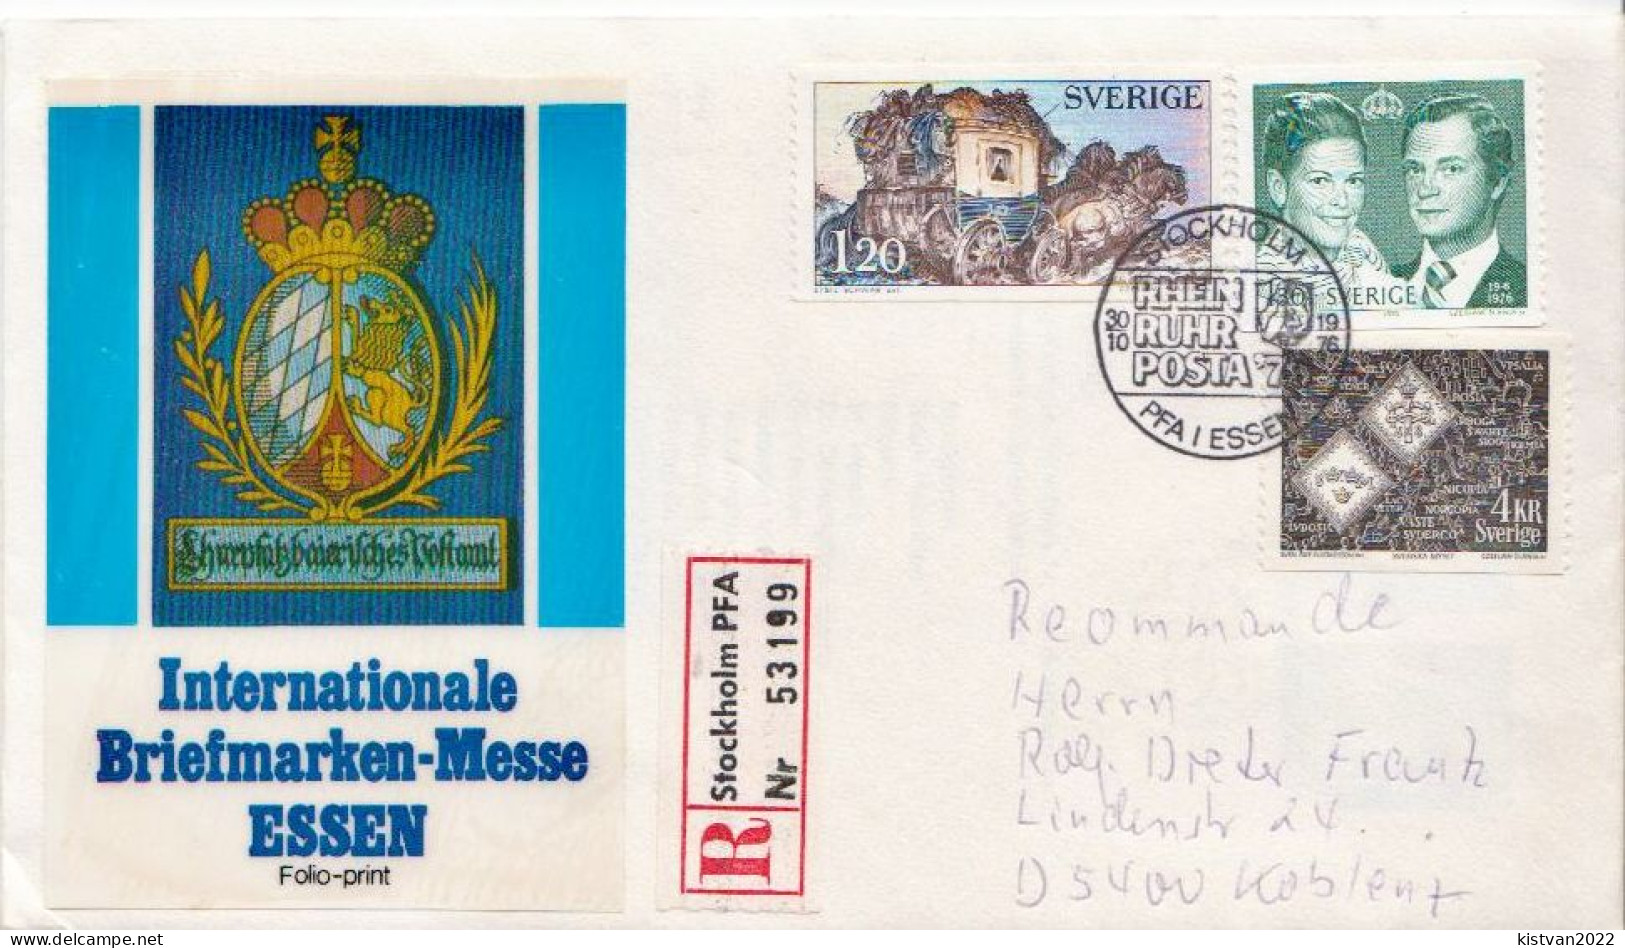 Postal History: Sweden R Cover - Expositions Philatéliques